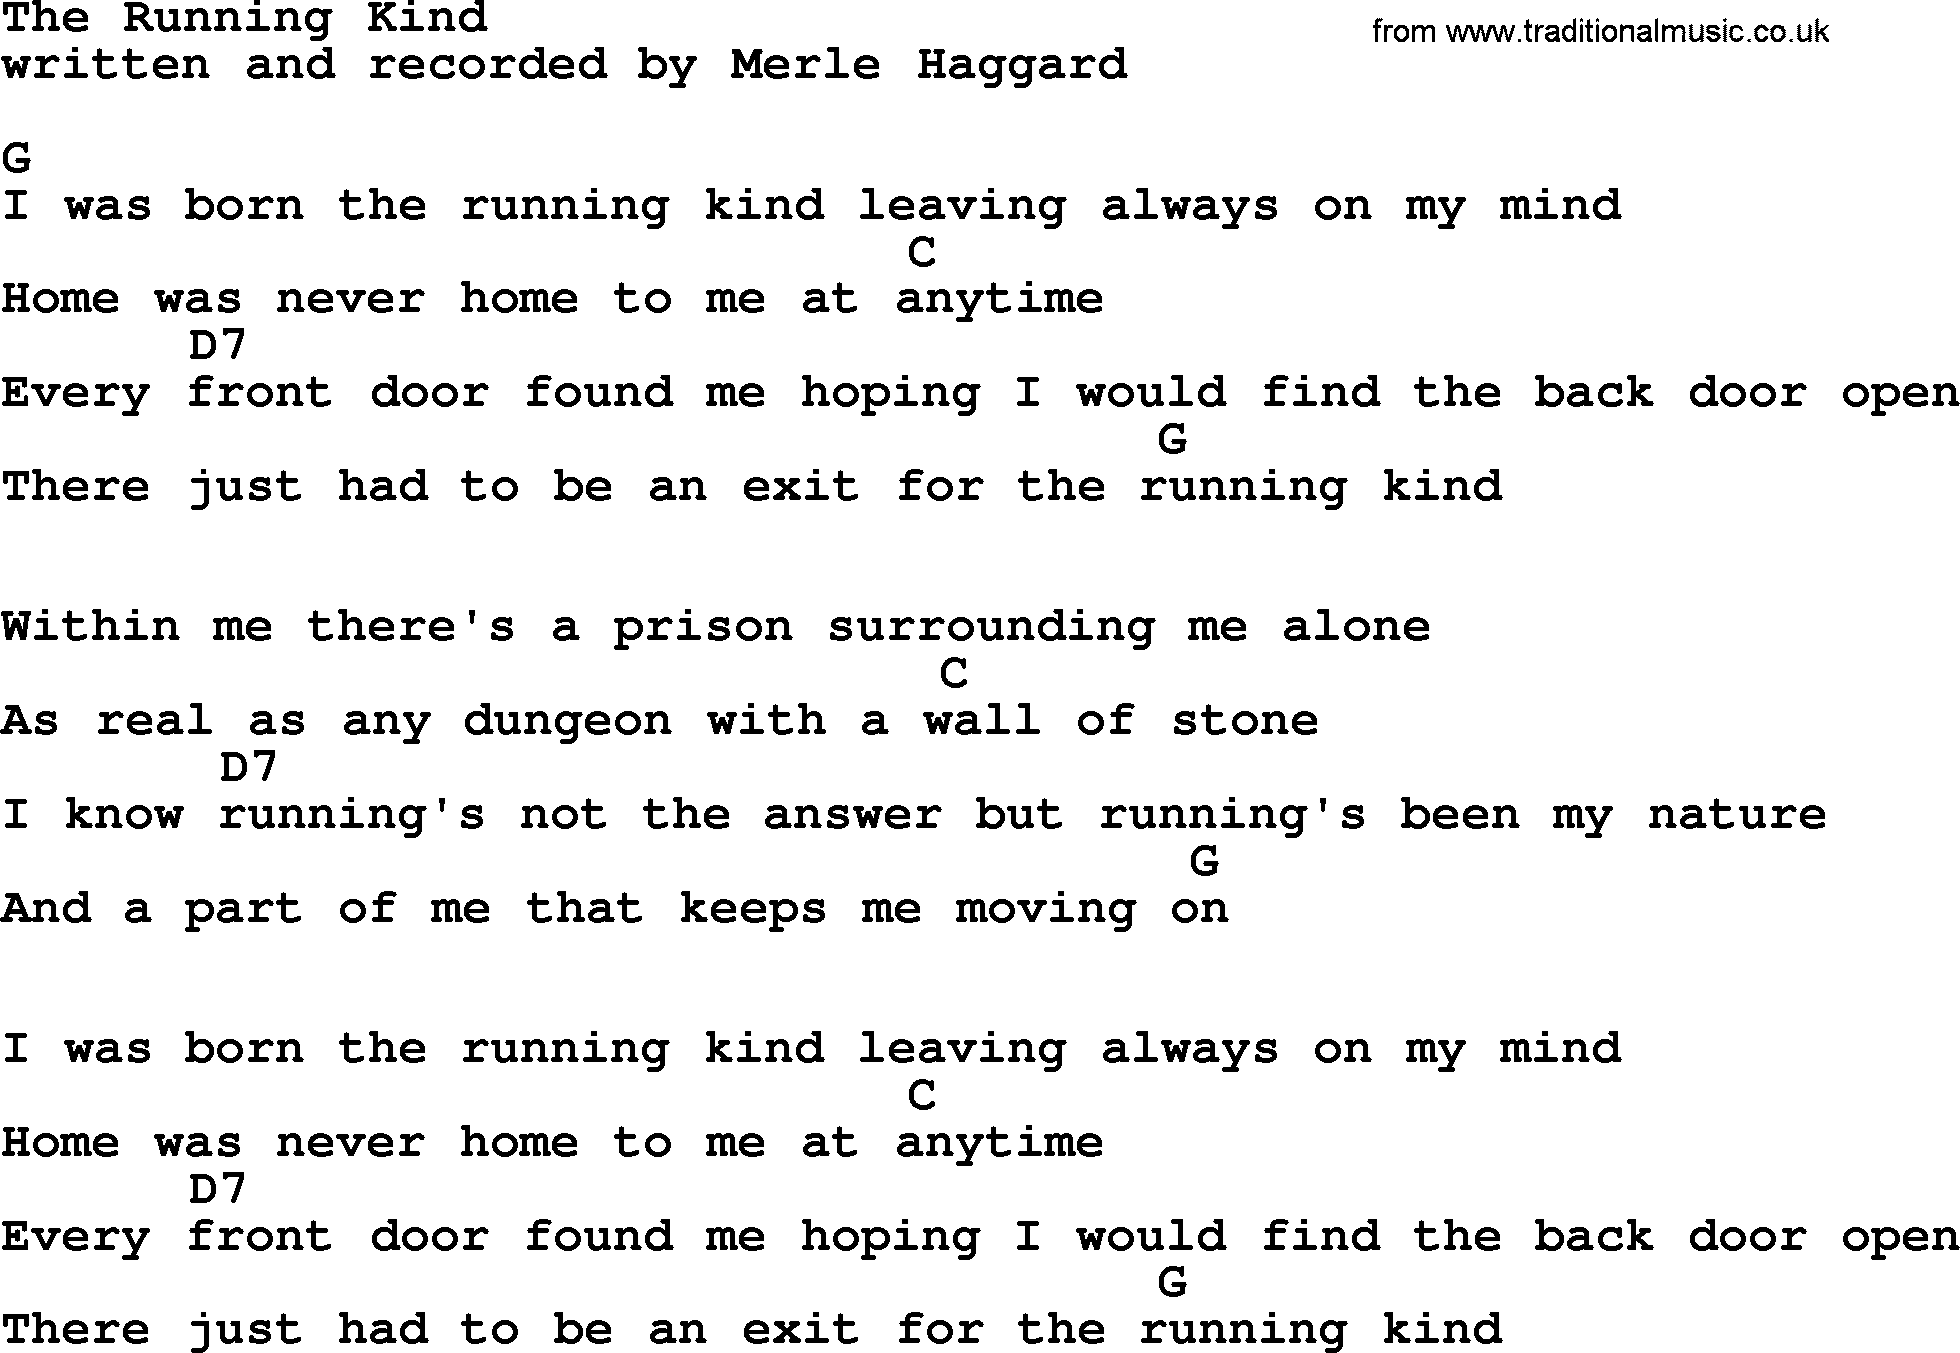 Merle Haggard song: The Running Kind, lyrics and chords